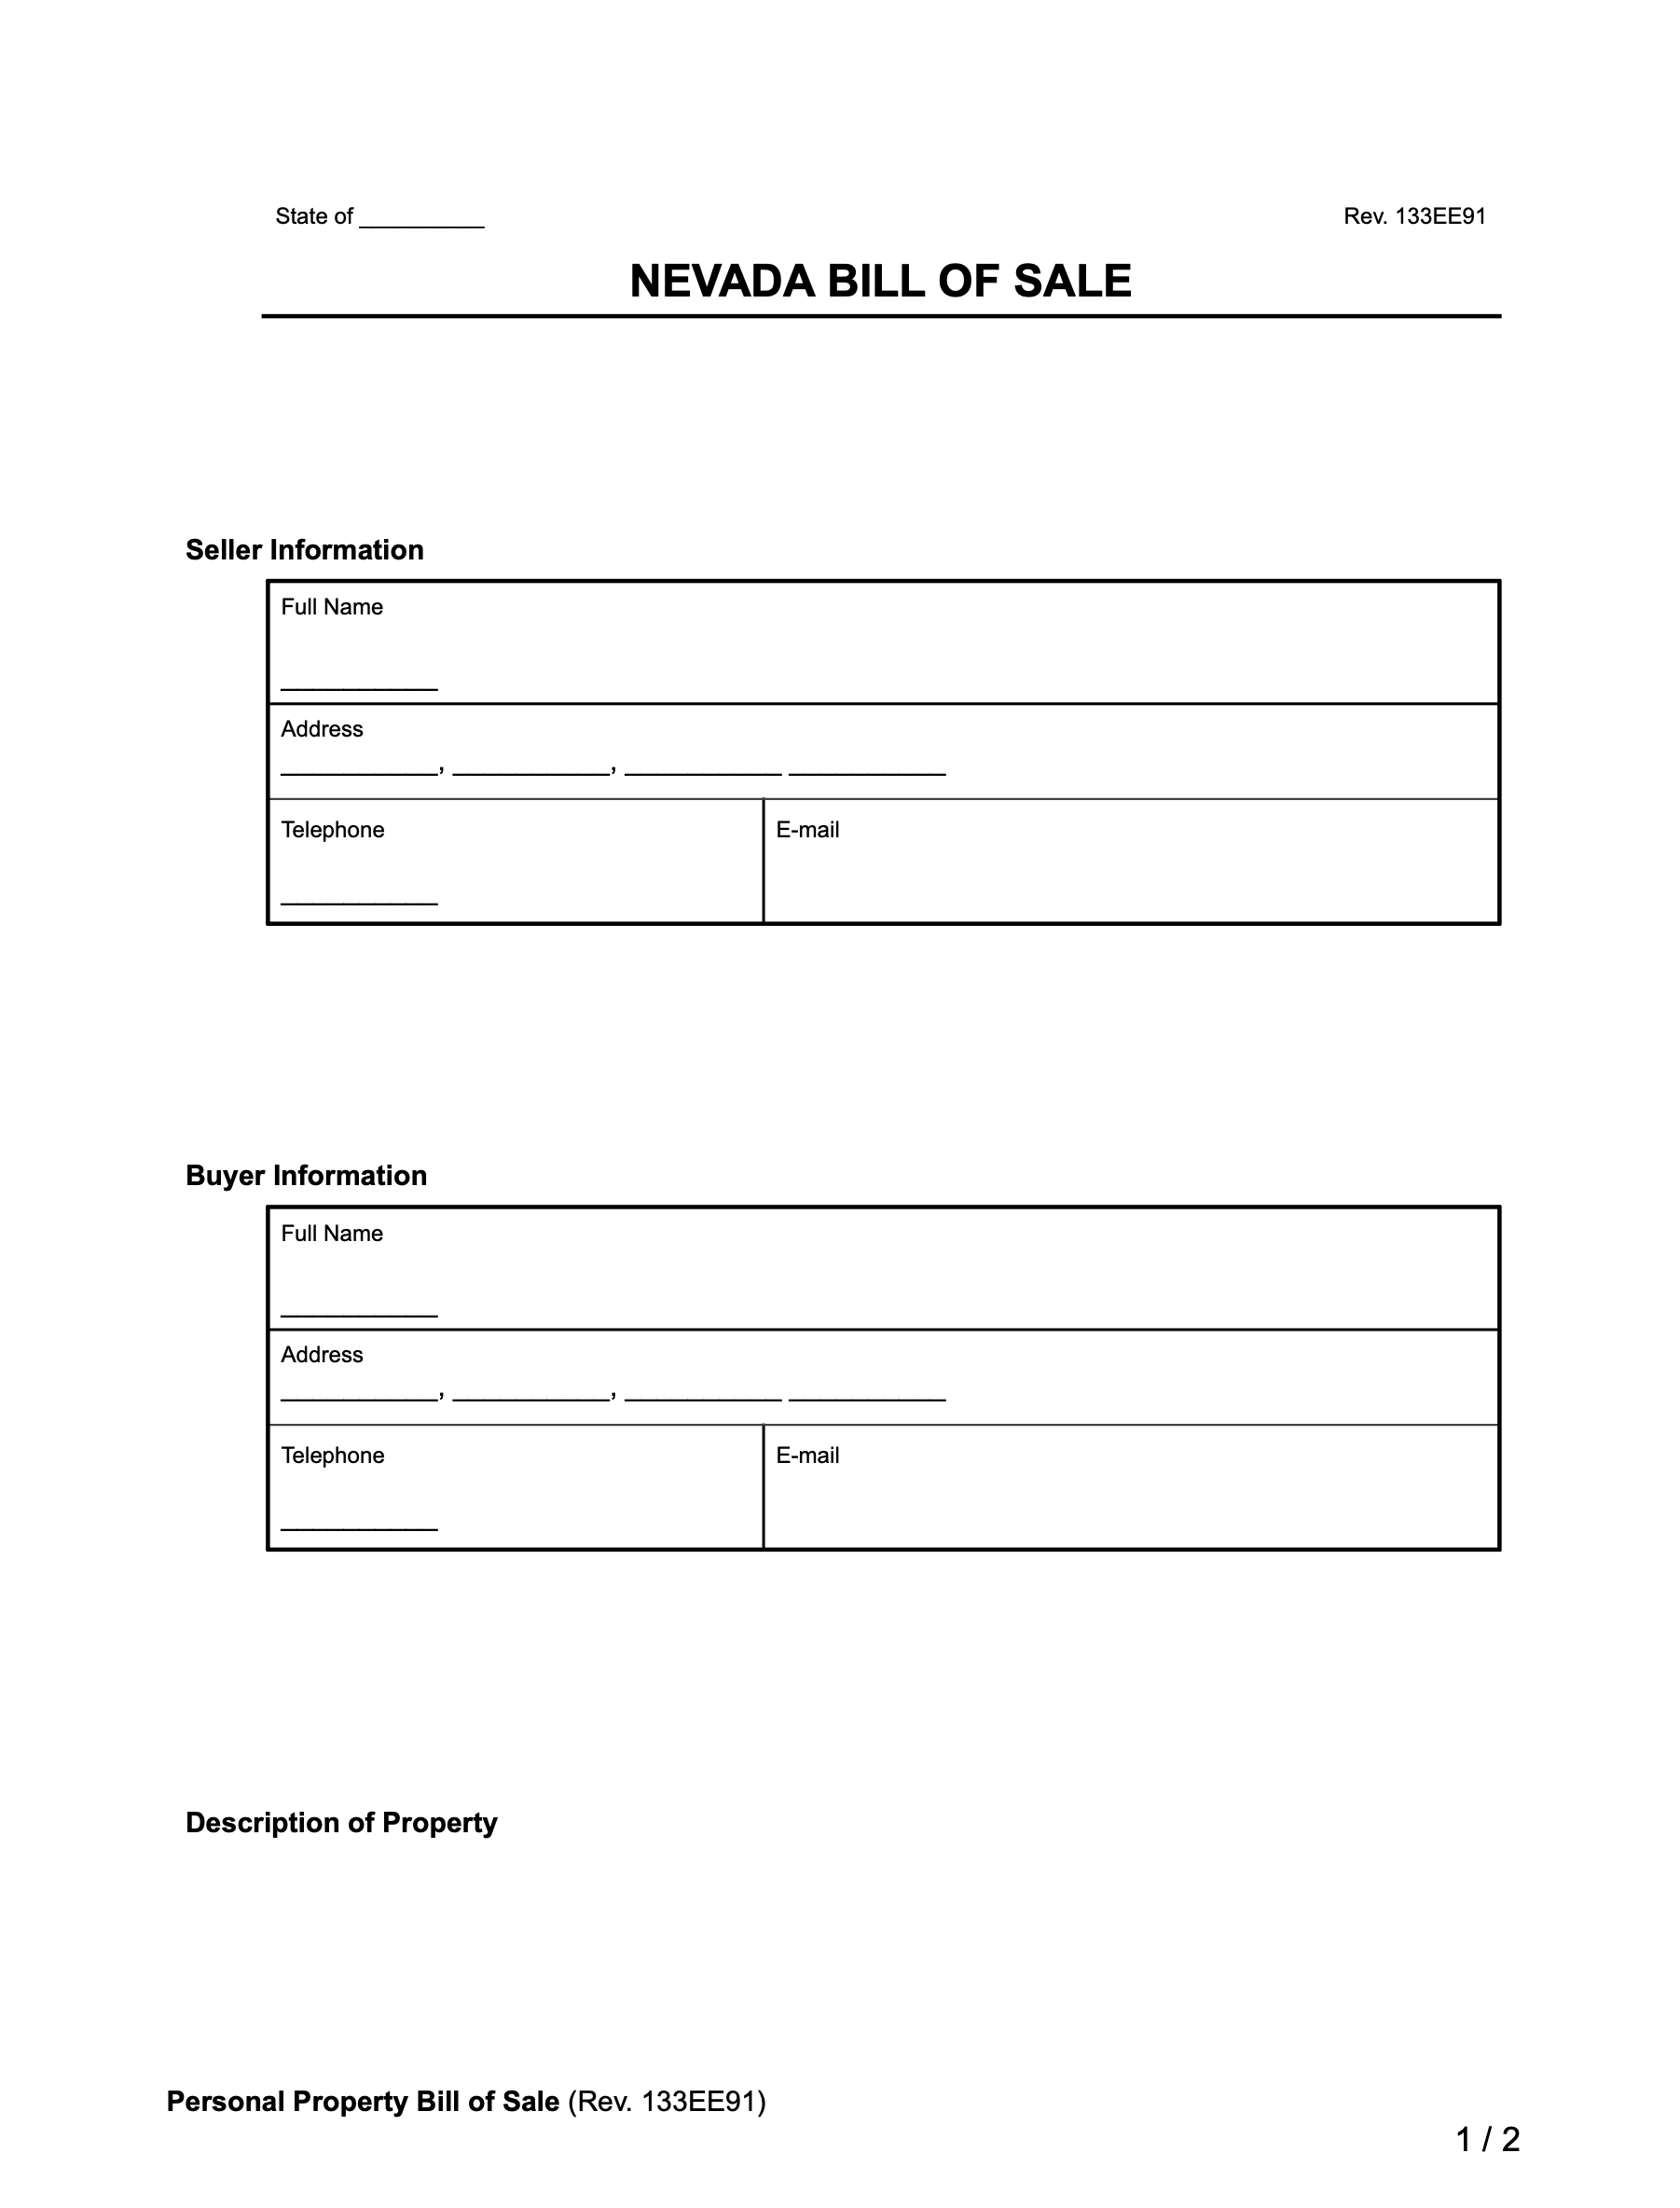 Nevada Bill of Sale Form